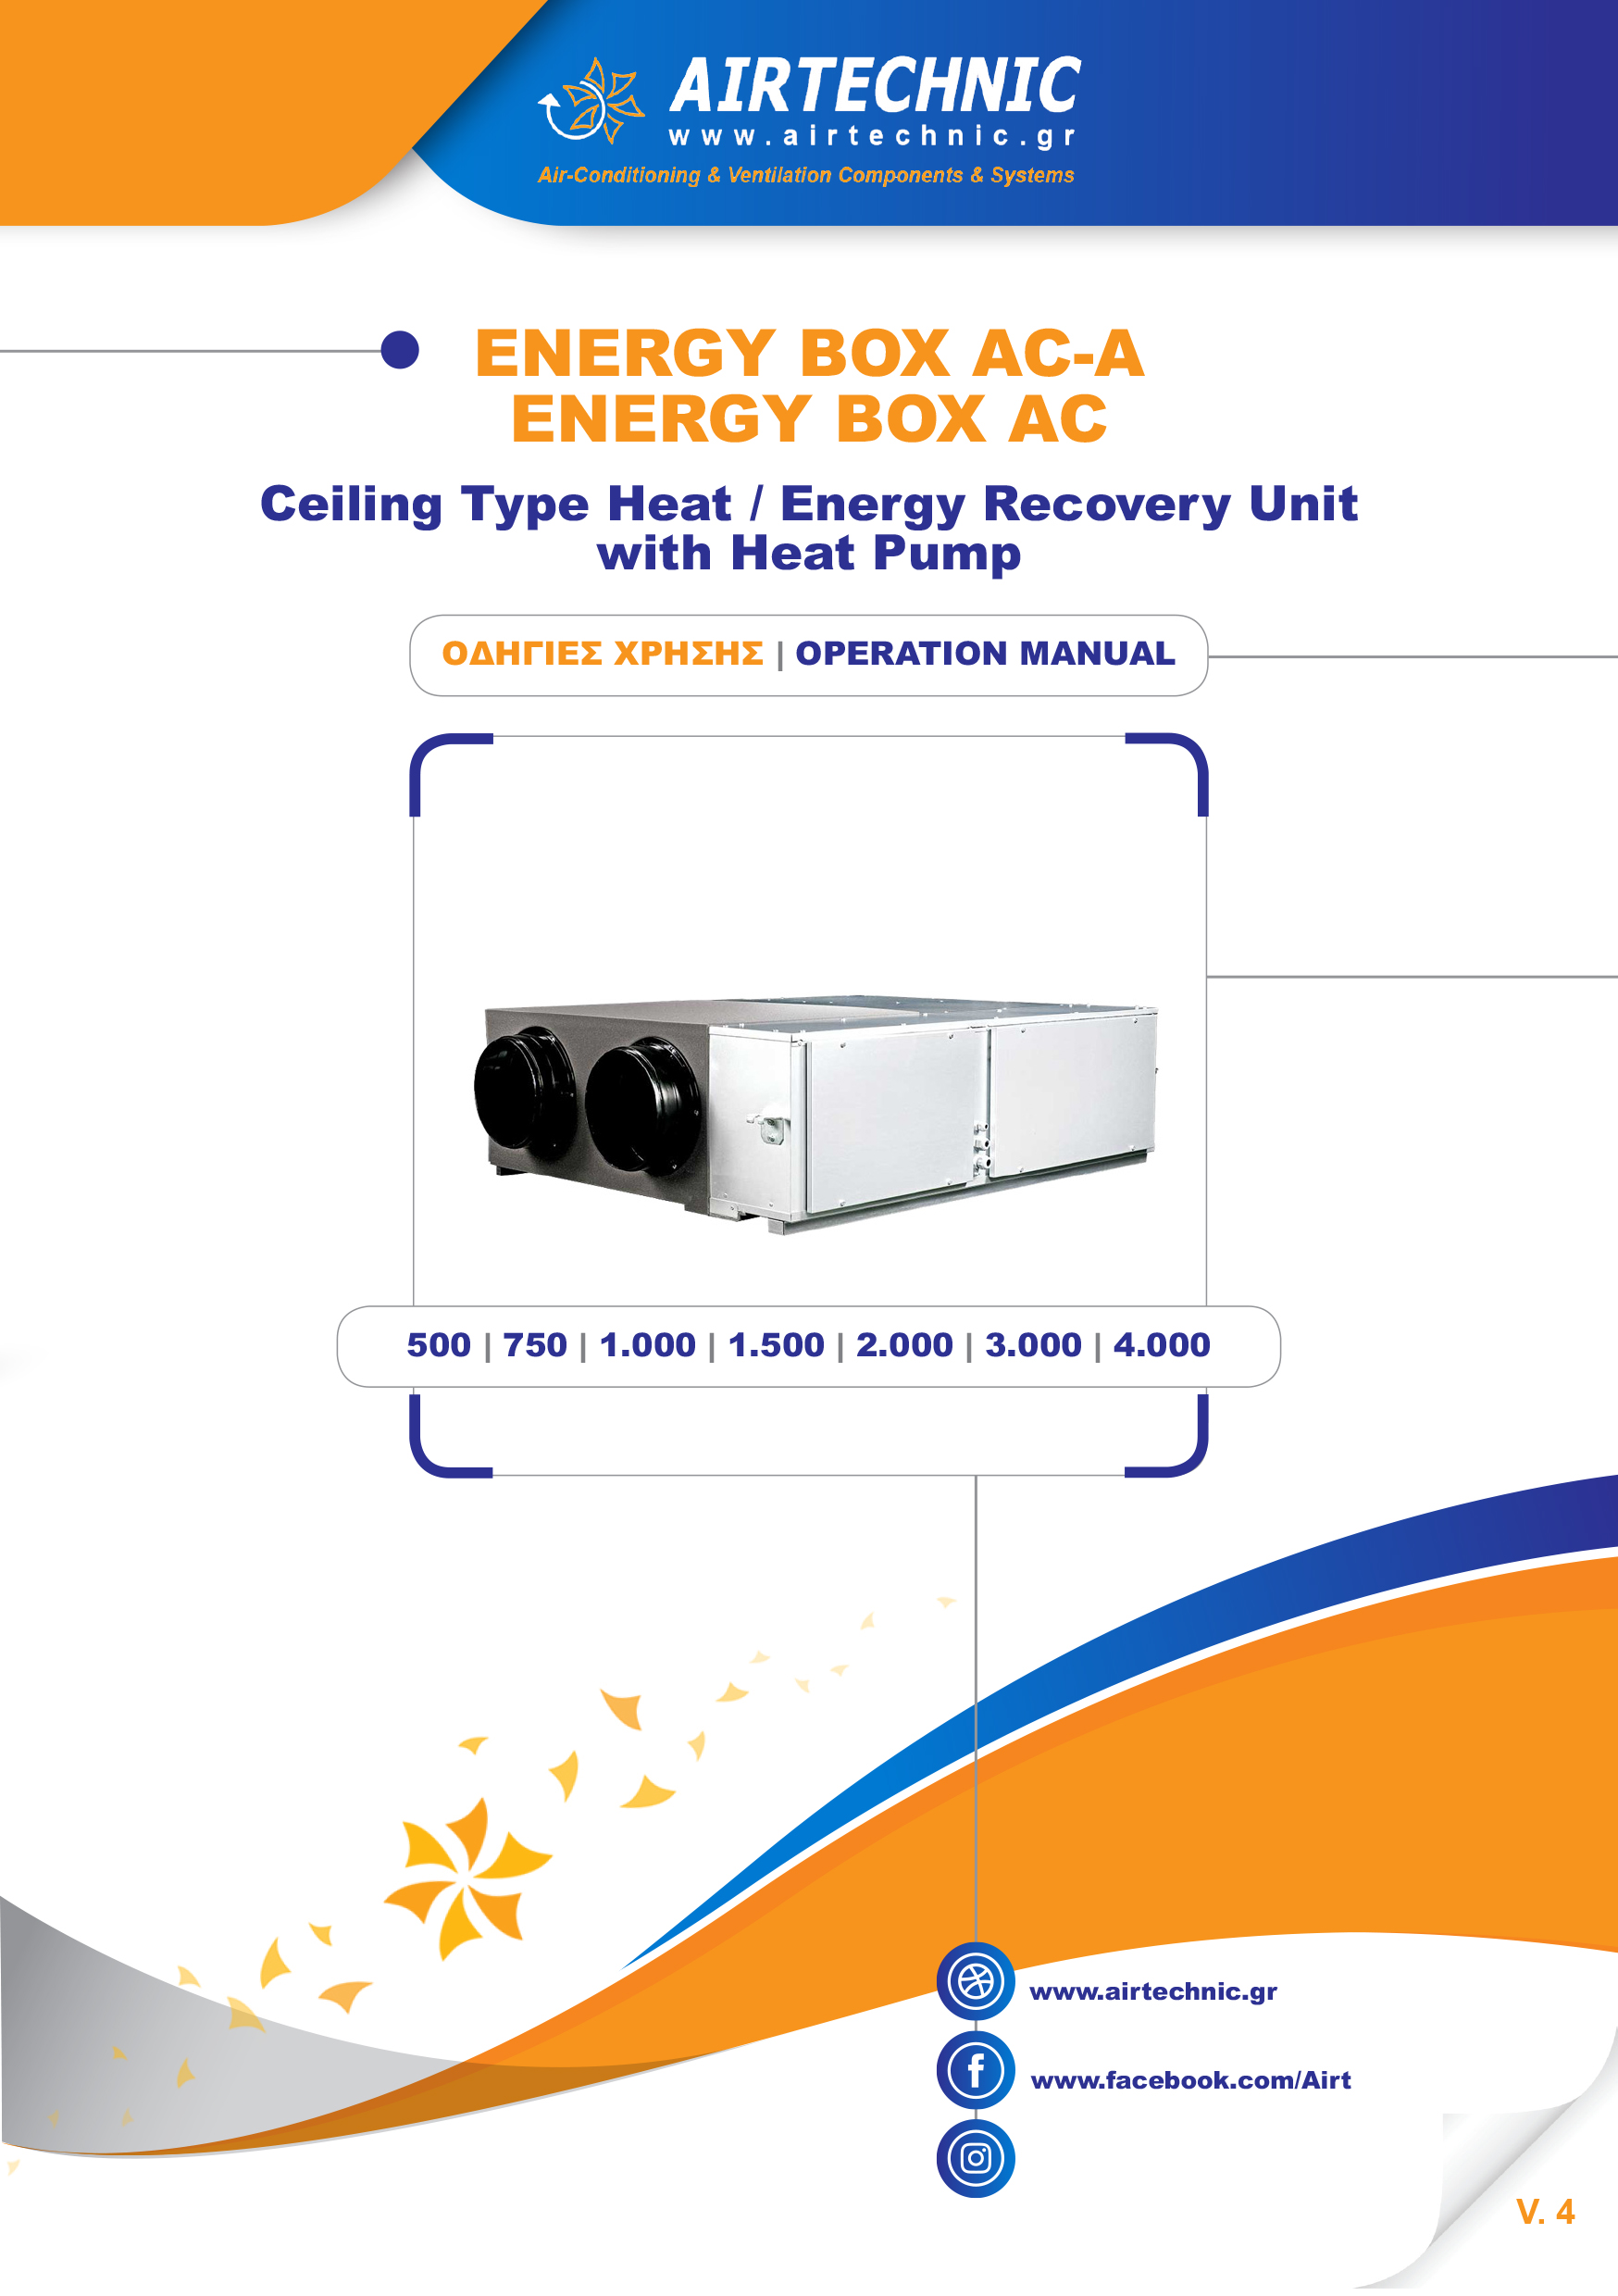 USER's MANUAL "ENERGY BOX AC-A / AC"